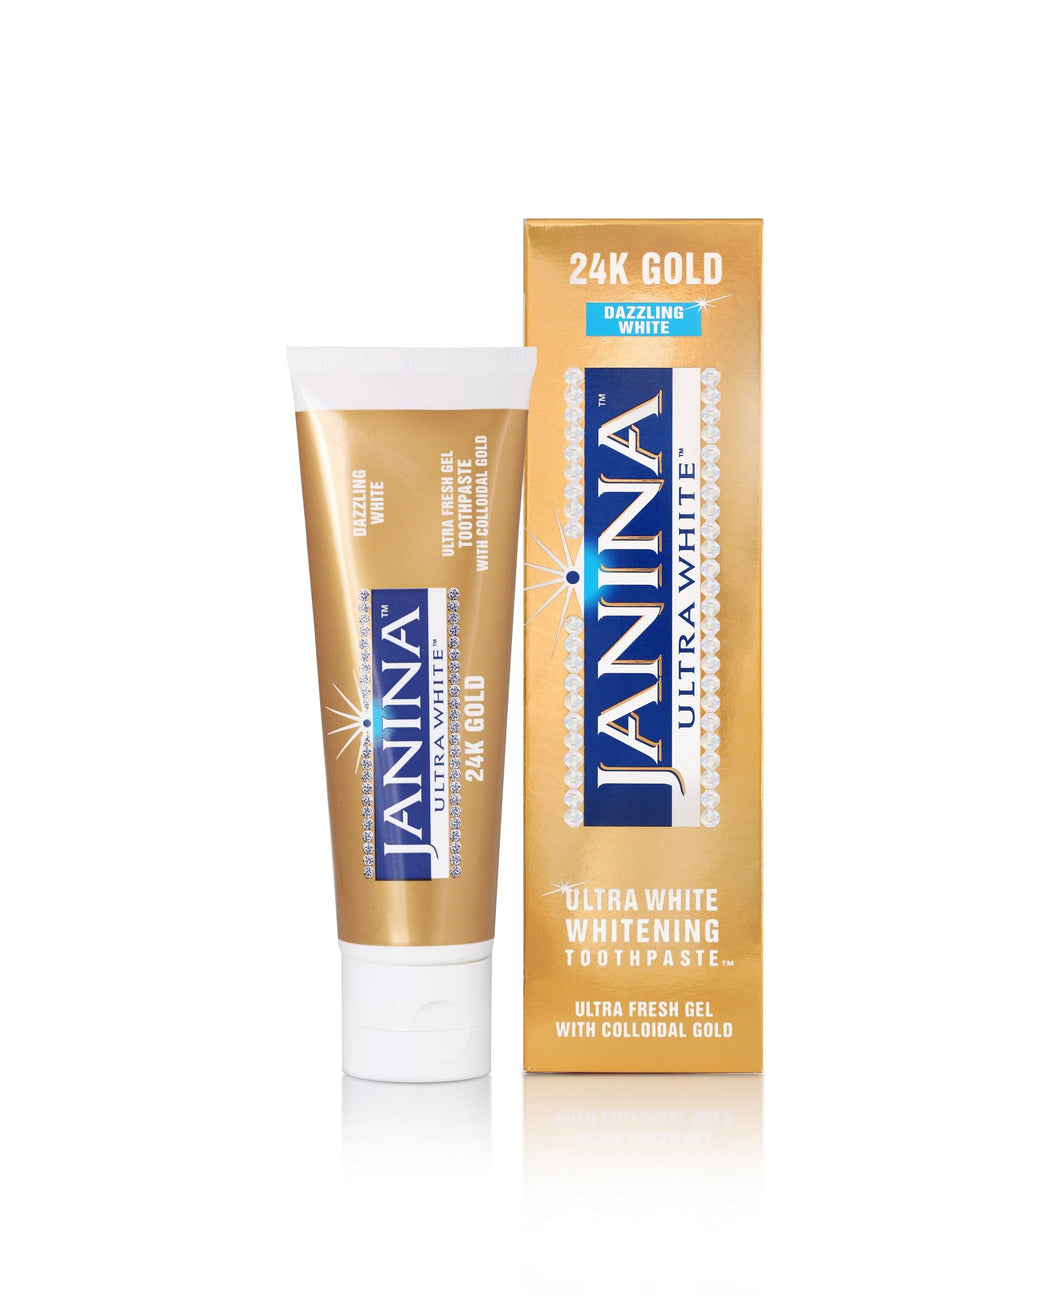 Janina Ultrawhite Whitening Toothpaste - 24K GOLD 75ml